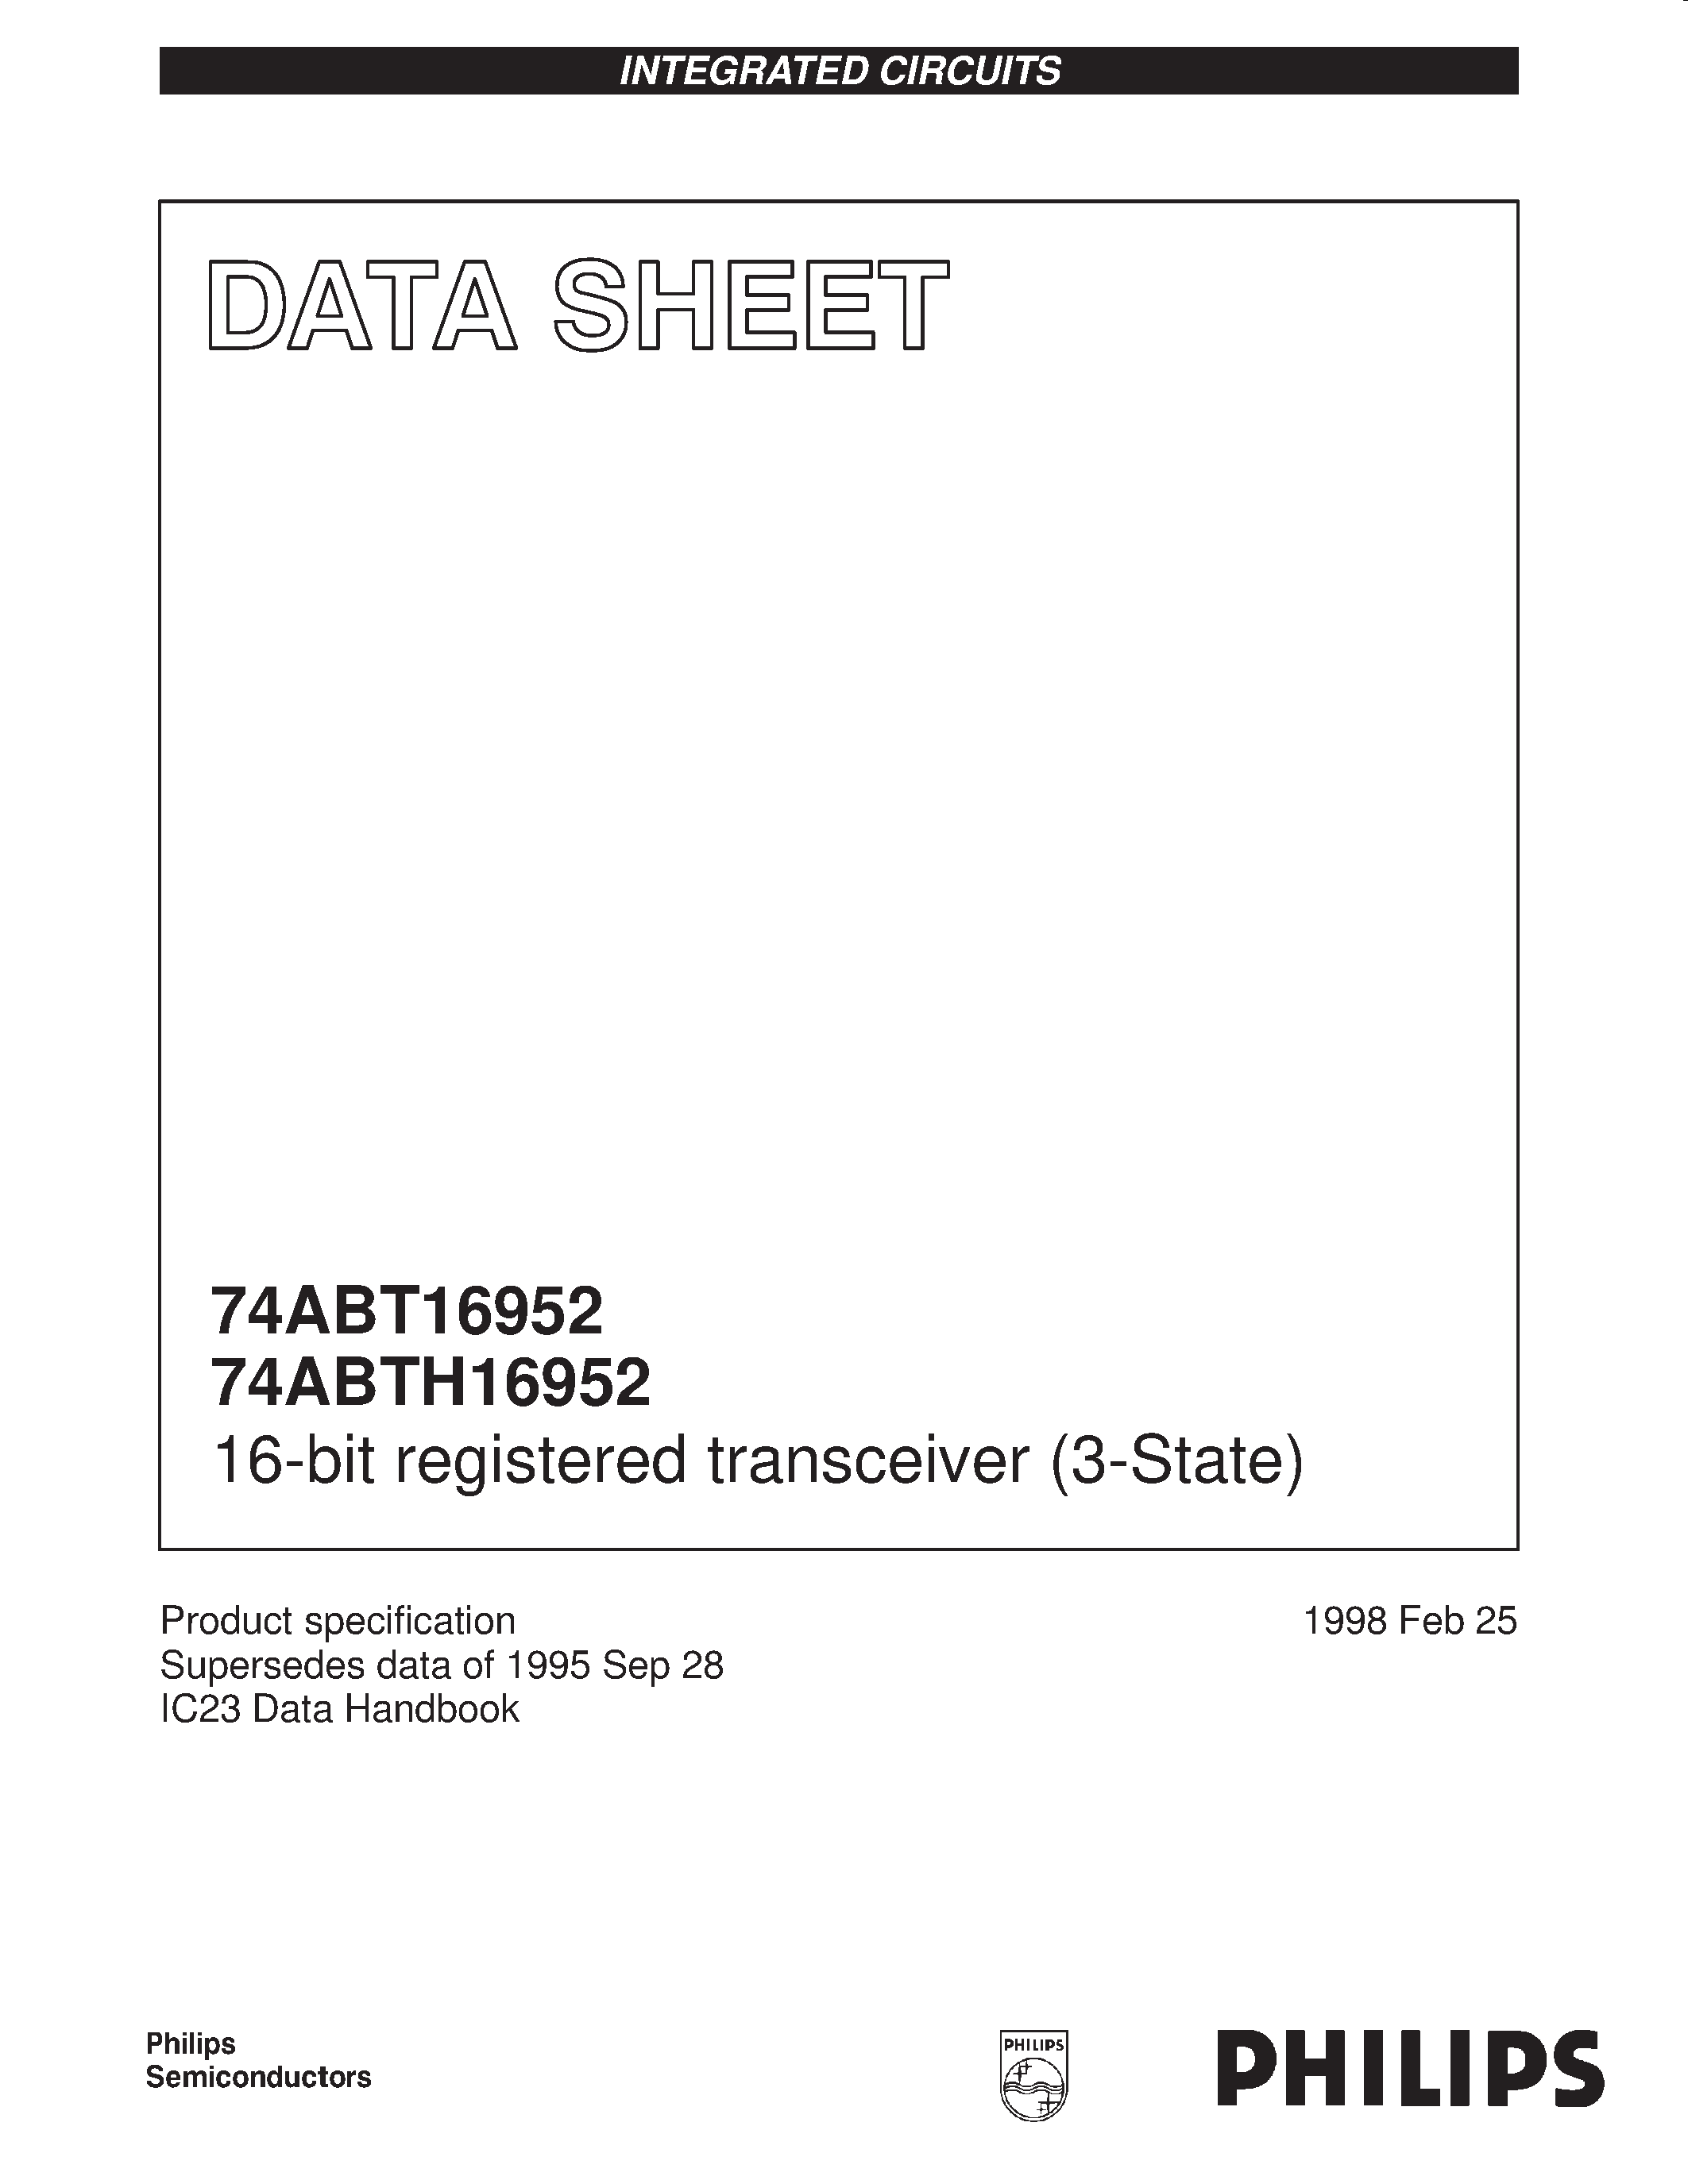 Datasheet 74ABTH16952DL - 16-bit registered transceiver 3-State page 1